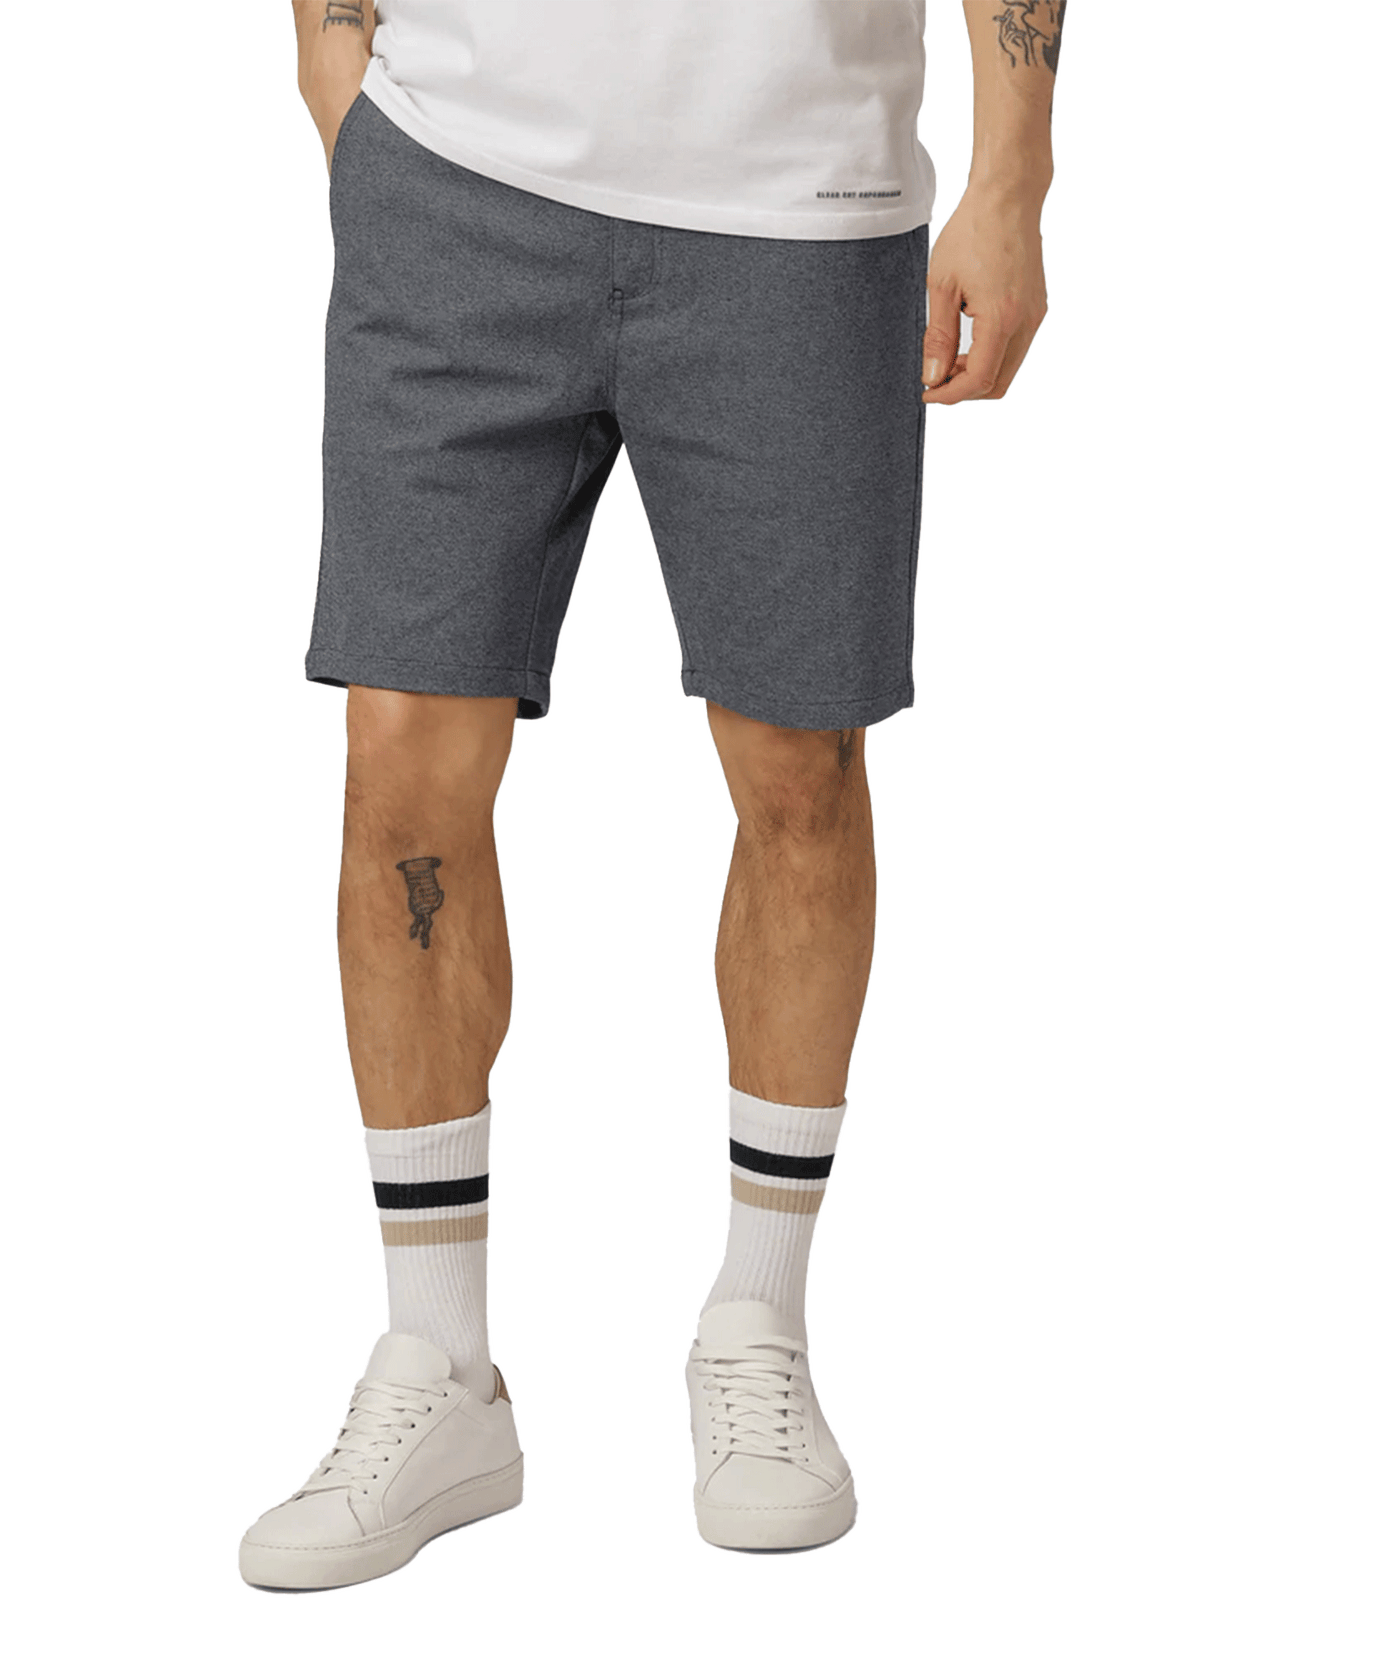 CLEANCUT - Cc1287 - Milano Jersey Shorts - Denim Melange